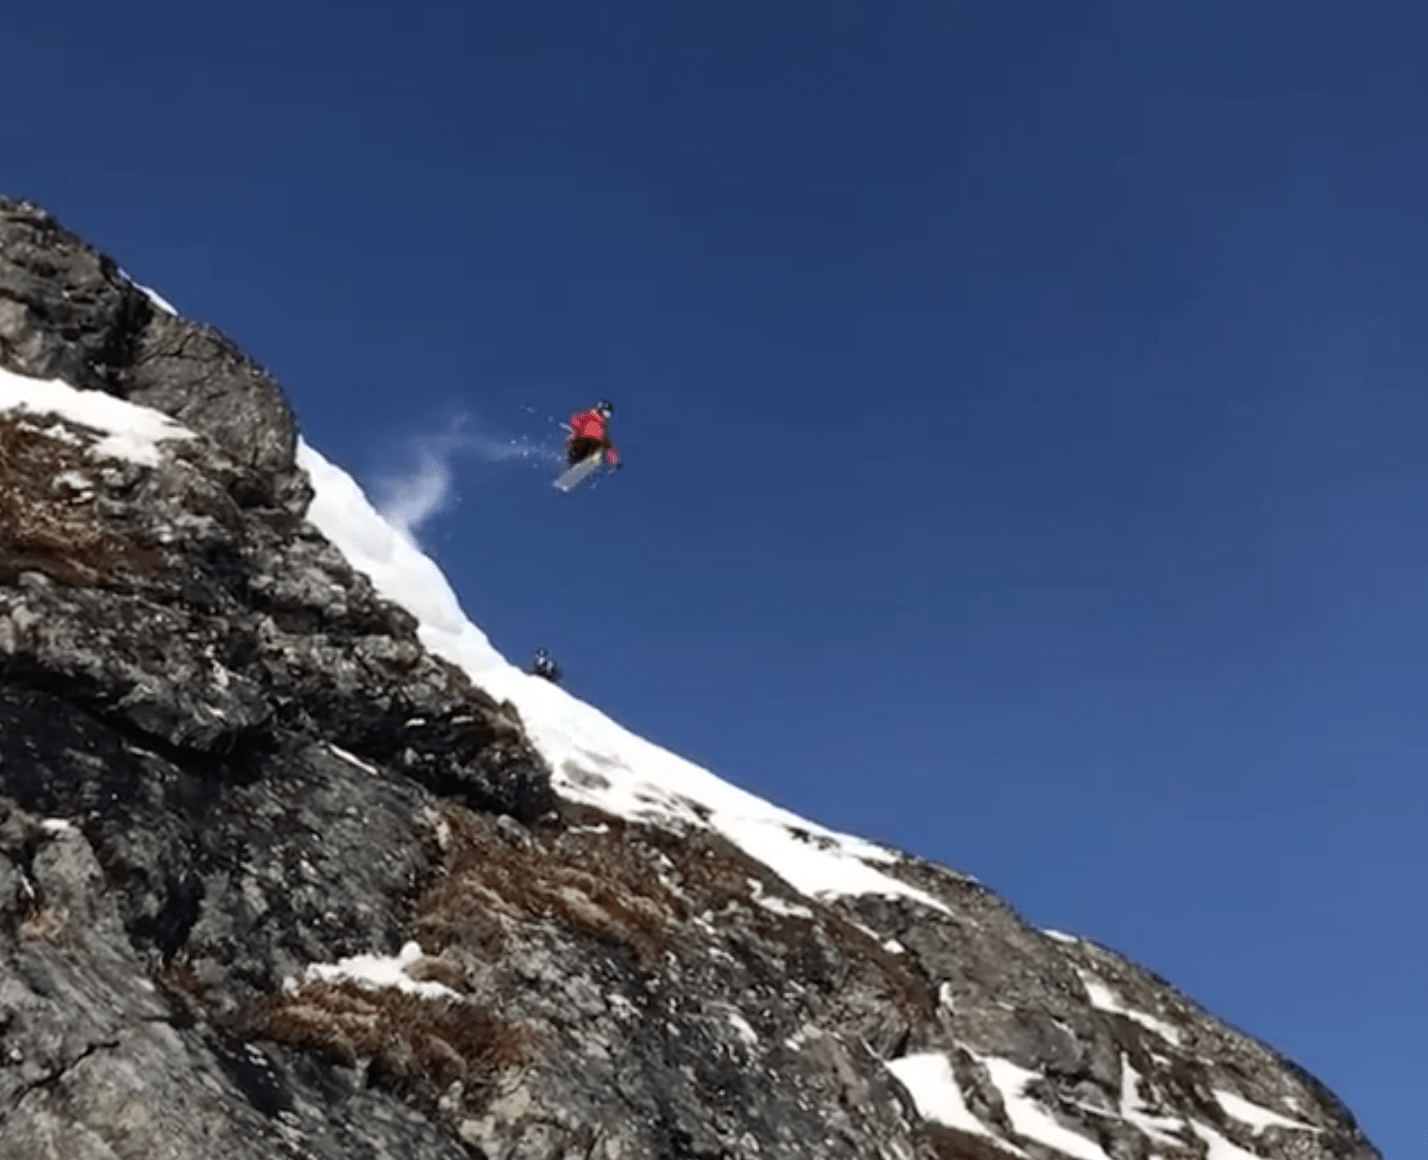 edvin olsson, freeskier, huge air, cliff jump, cliff